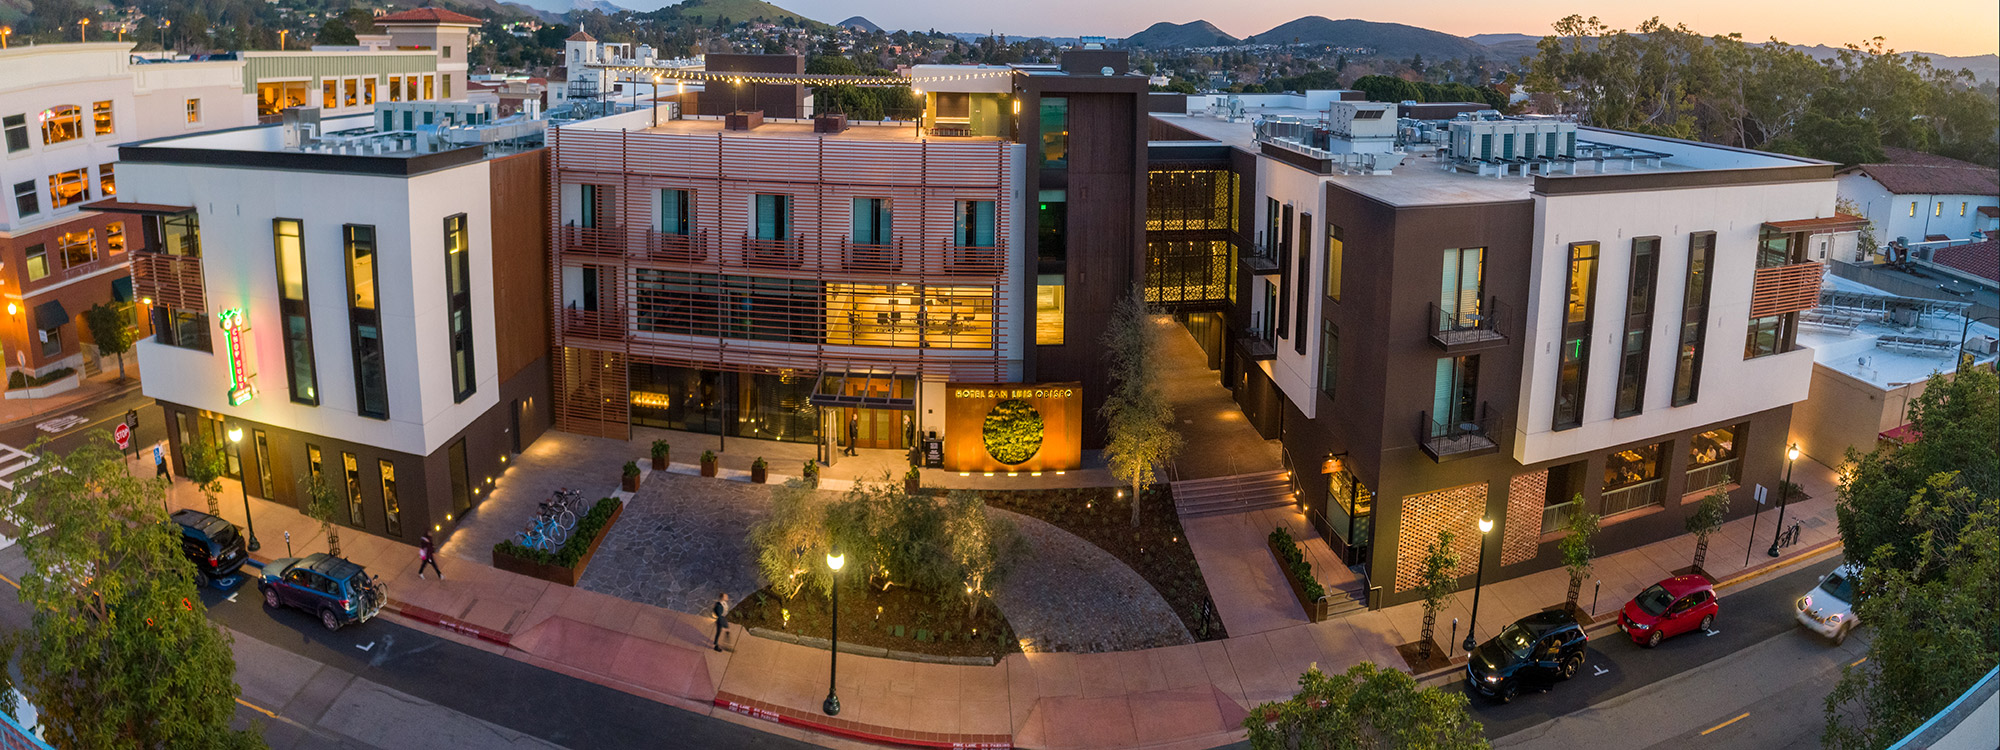 Hotel San Luis Obispo construction - Hotel Resturant Builder - JW Design & Construction